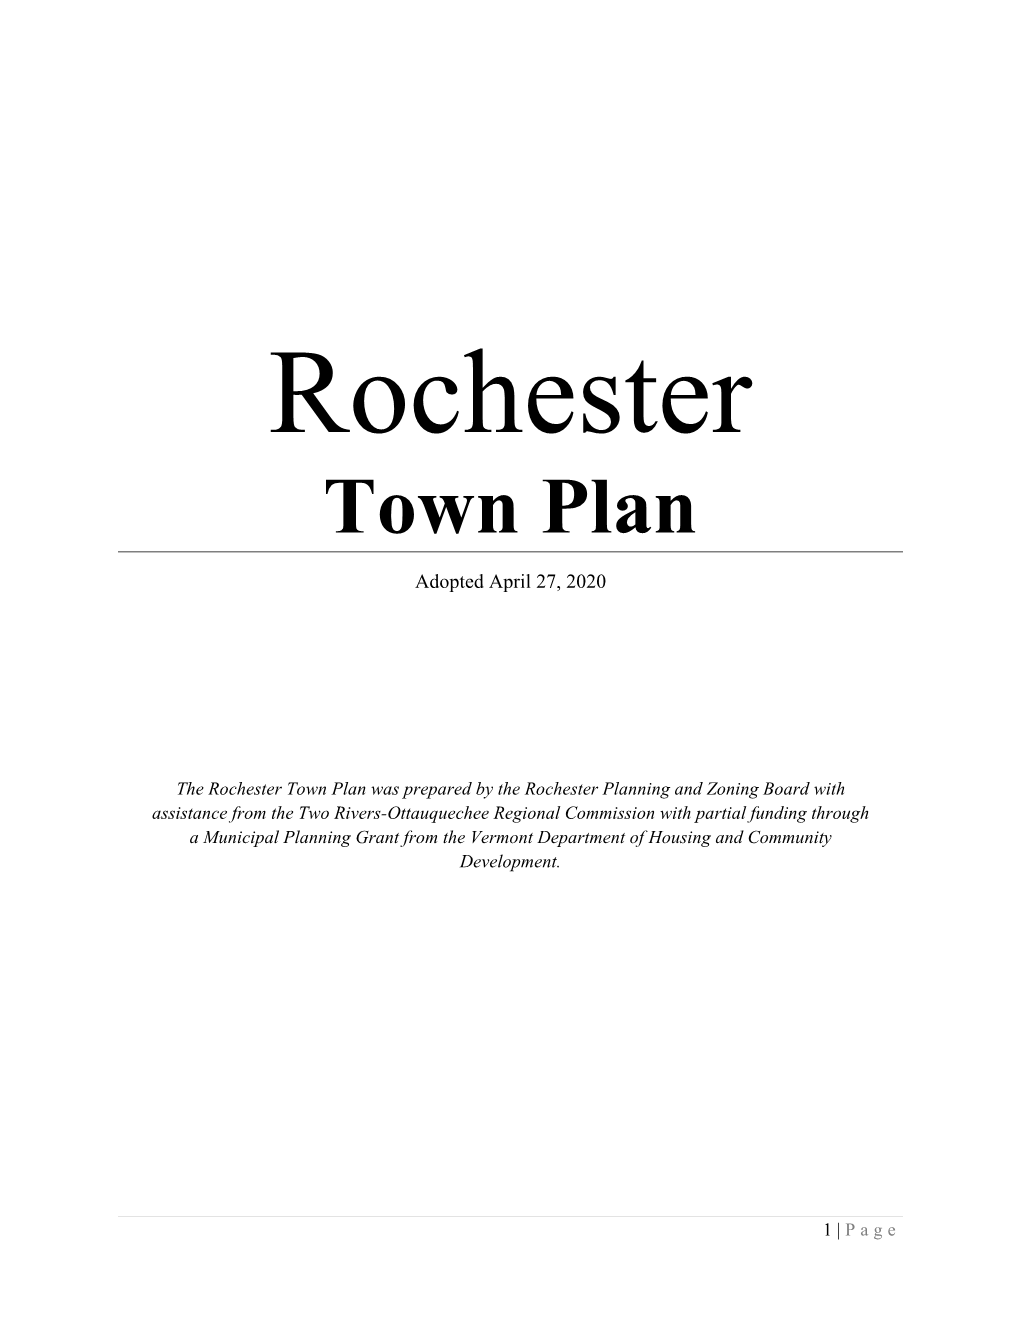 Town Plan Adopted April 27, 2020